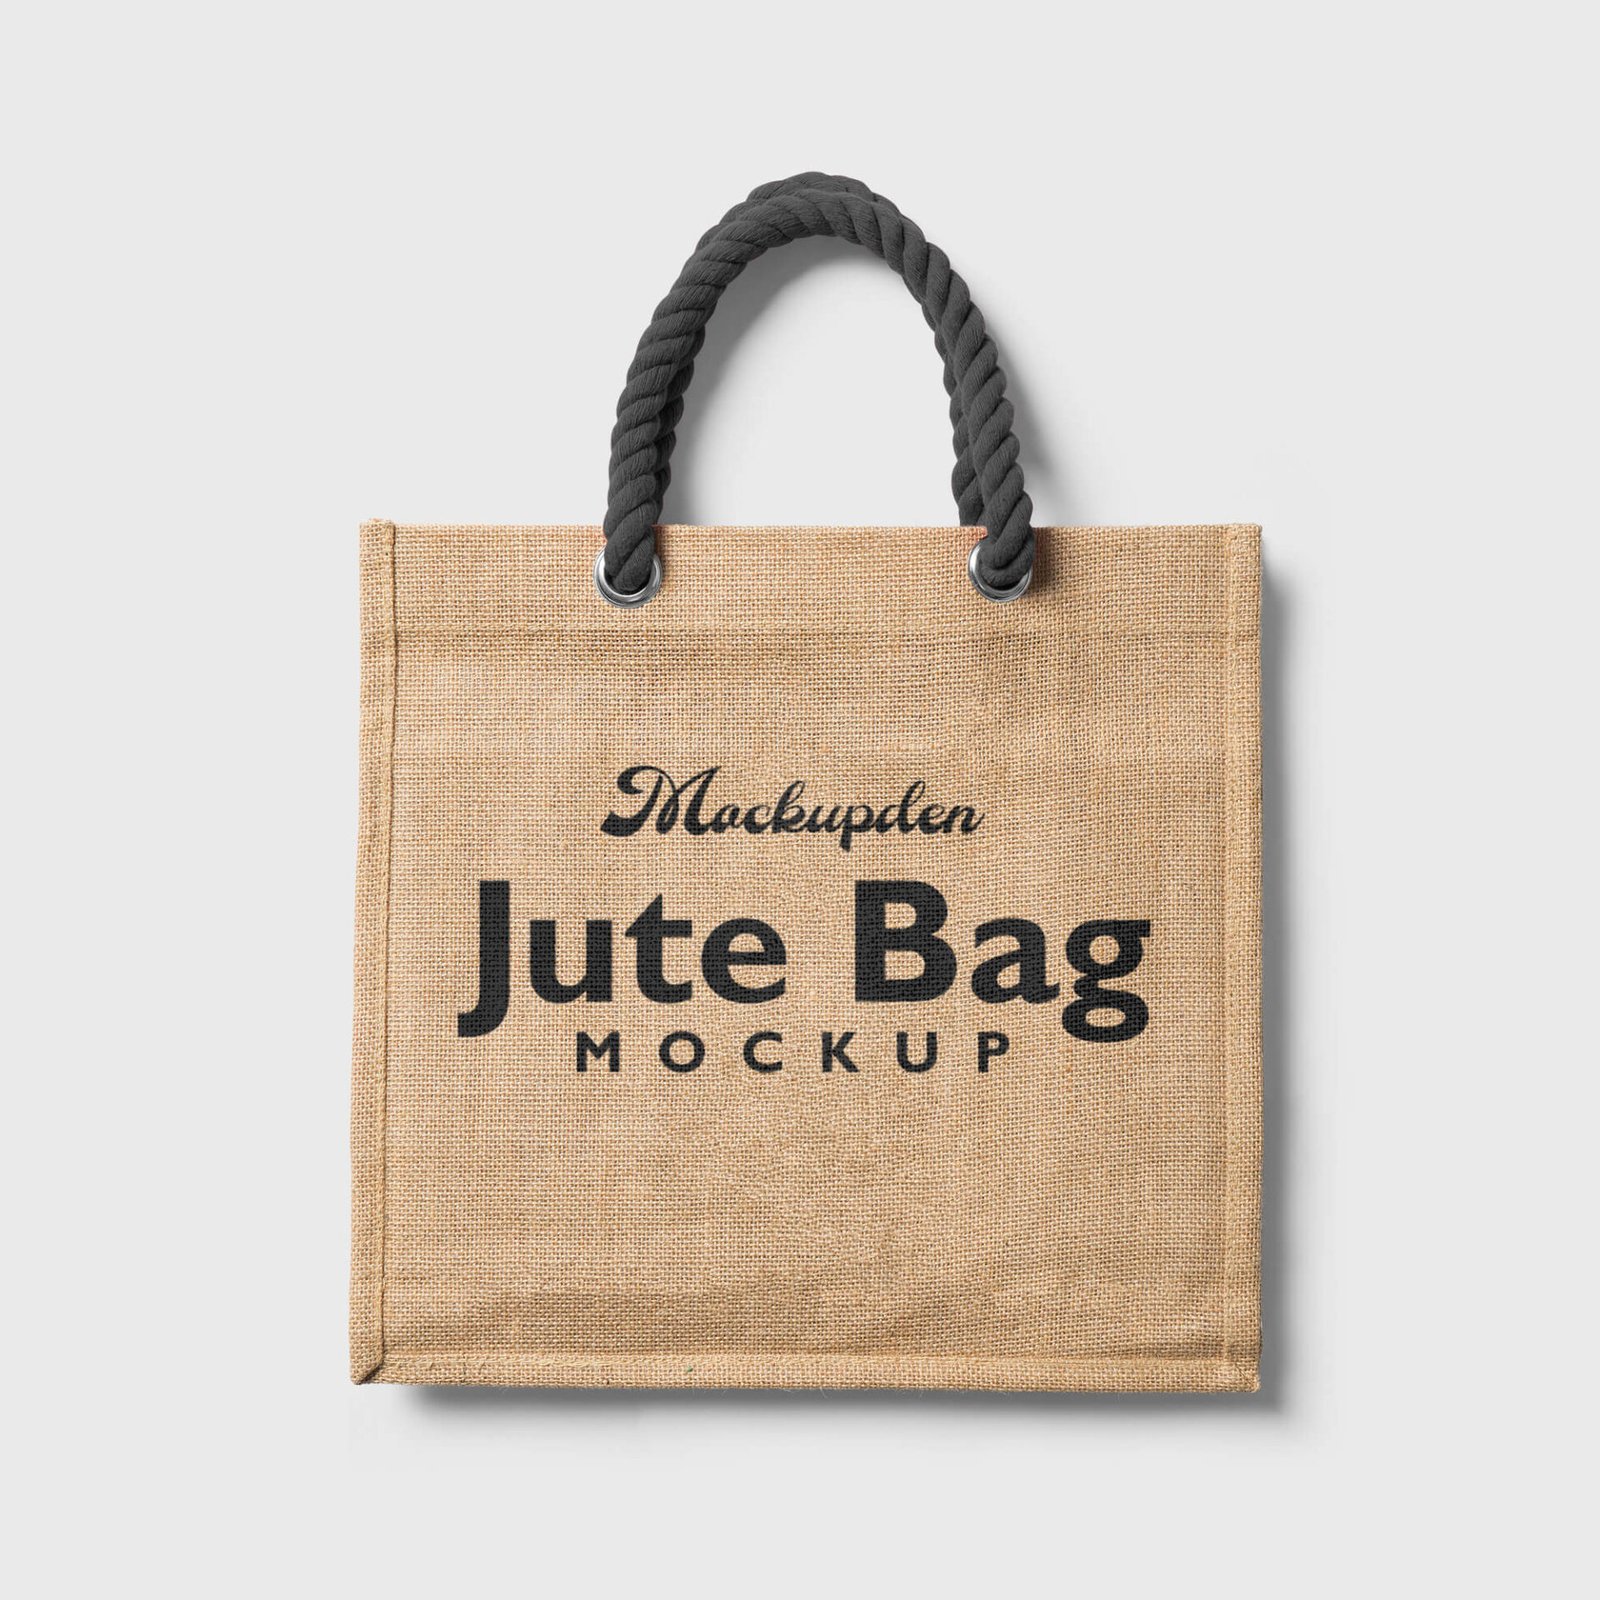 Jute bag mockup psd free information